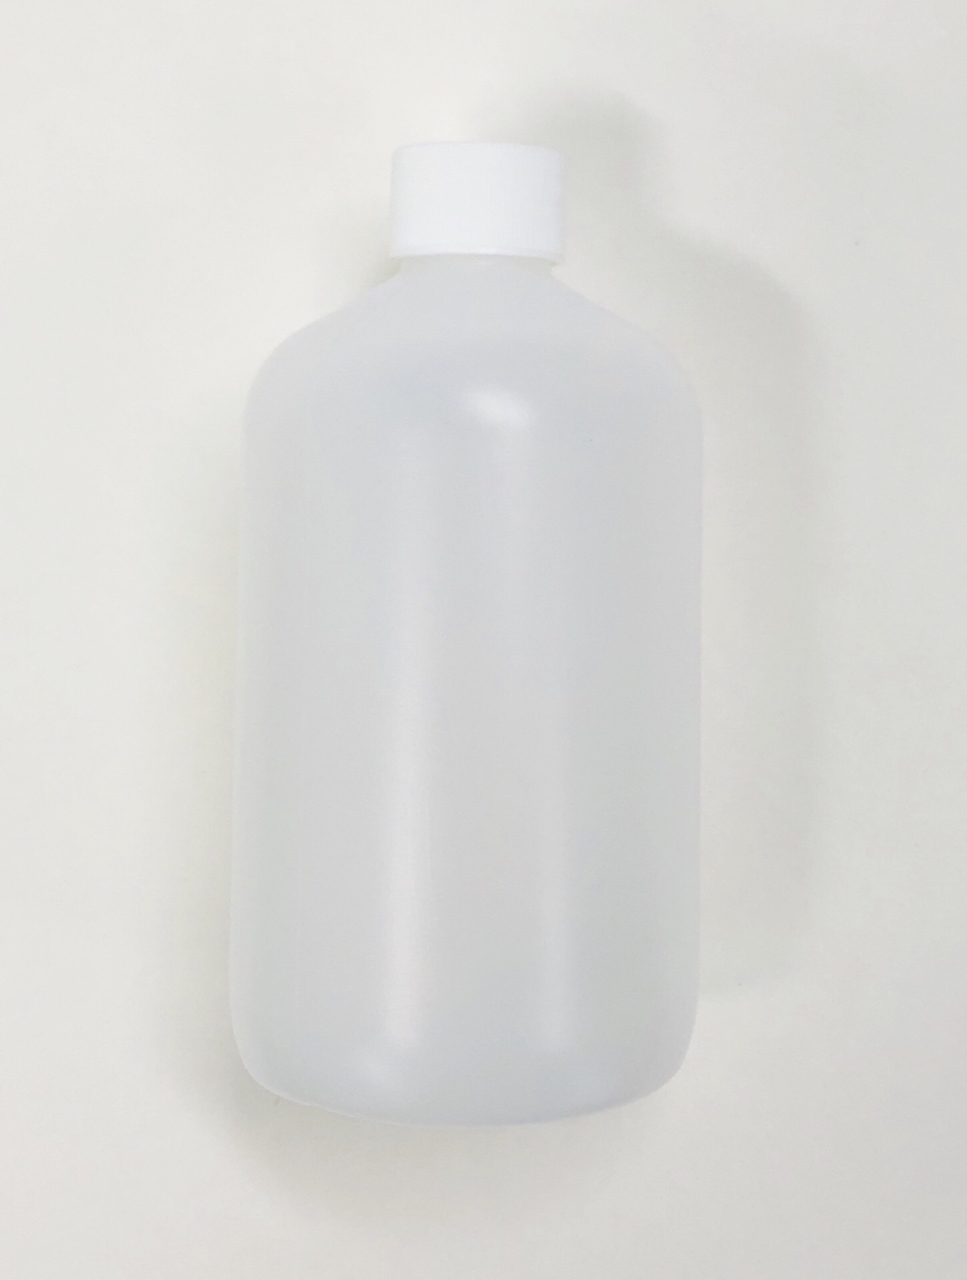 Picture of Empty HDPE Boston Round bottle: 16oz